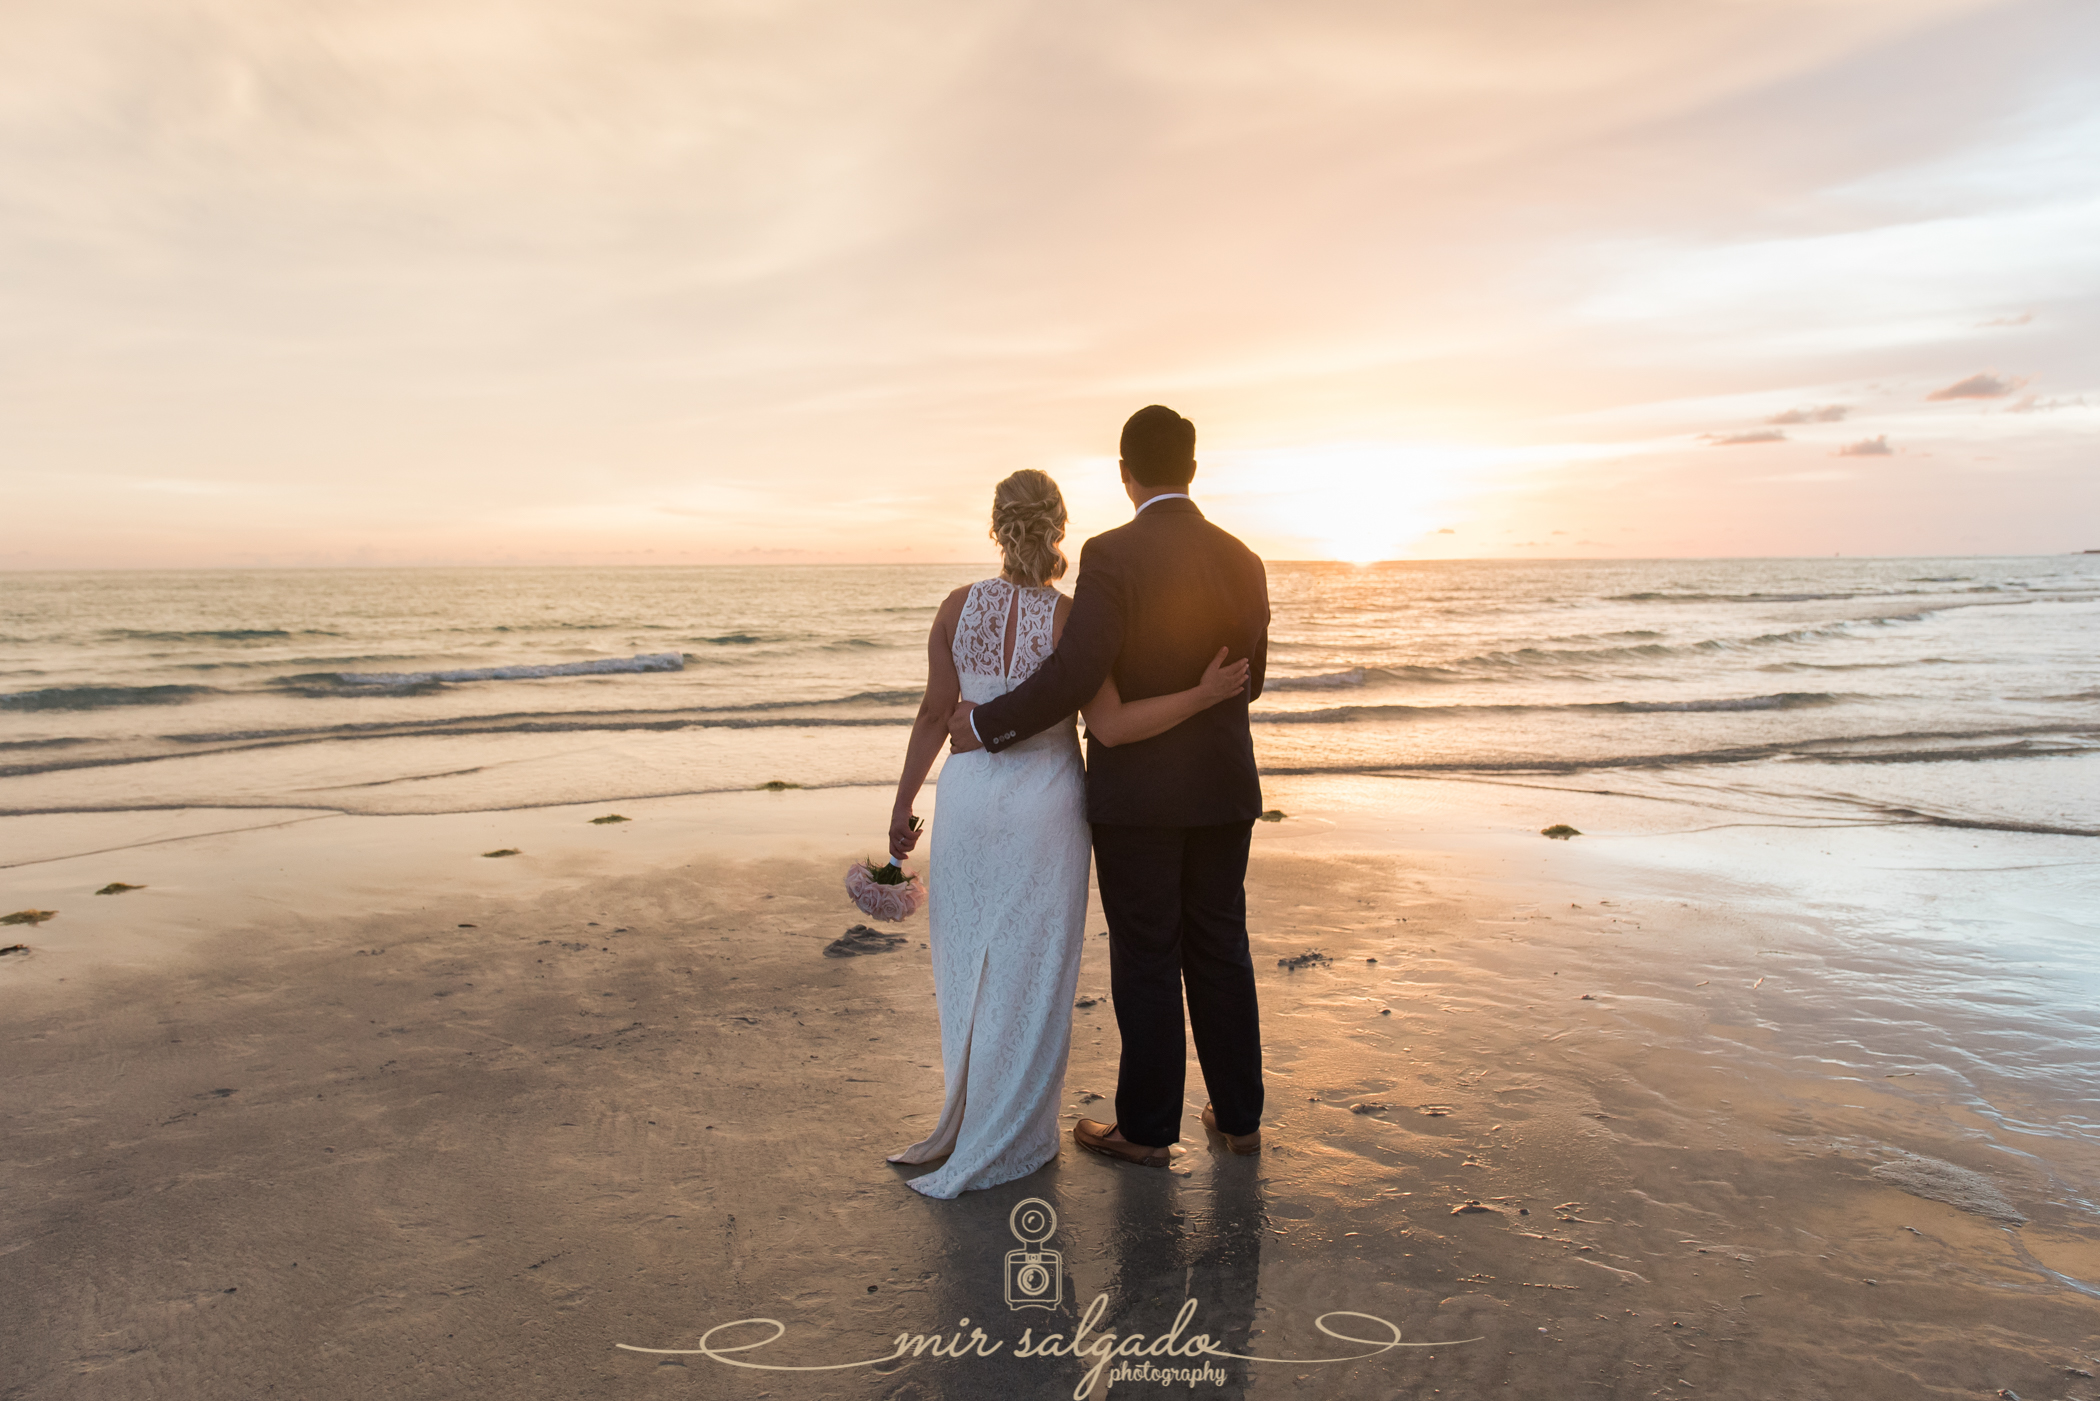 sunset-wedding-portrait, sunset-wedding-pictures, sunset-bride-and-groom, beach-sunset-photography, stunning-sunset-photography